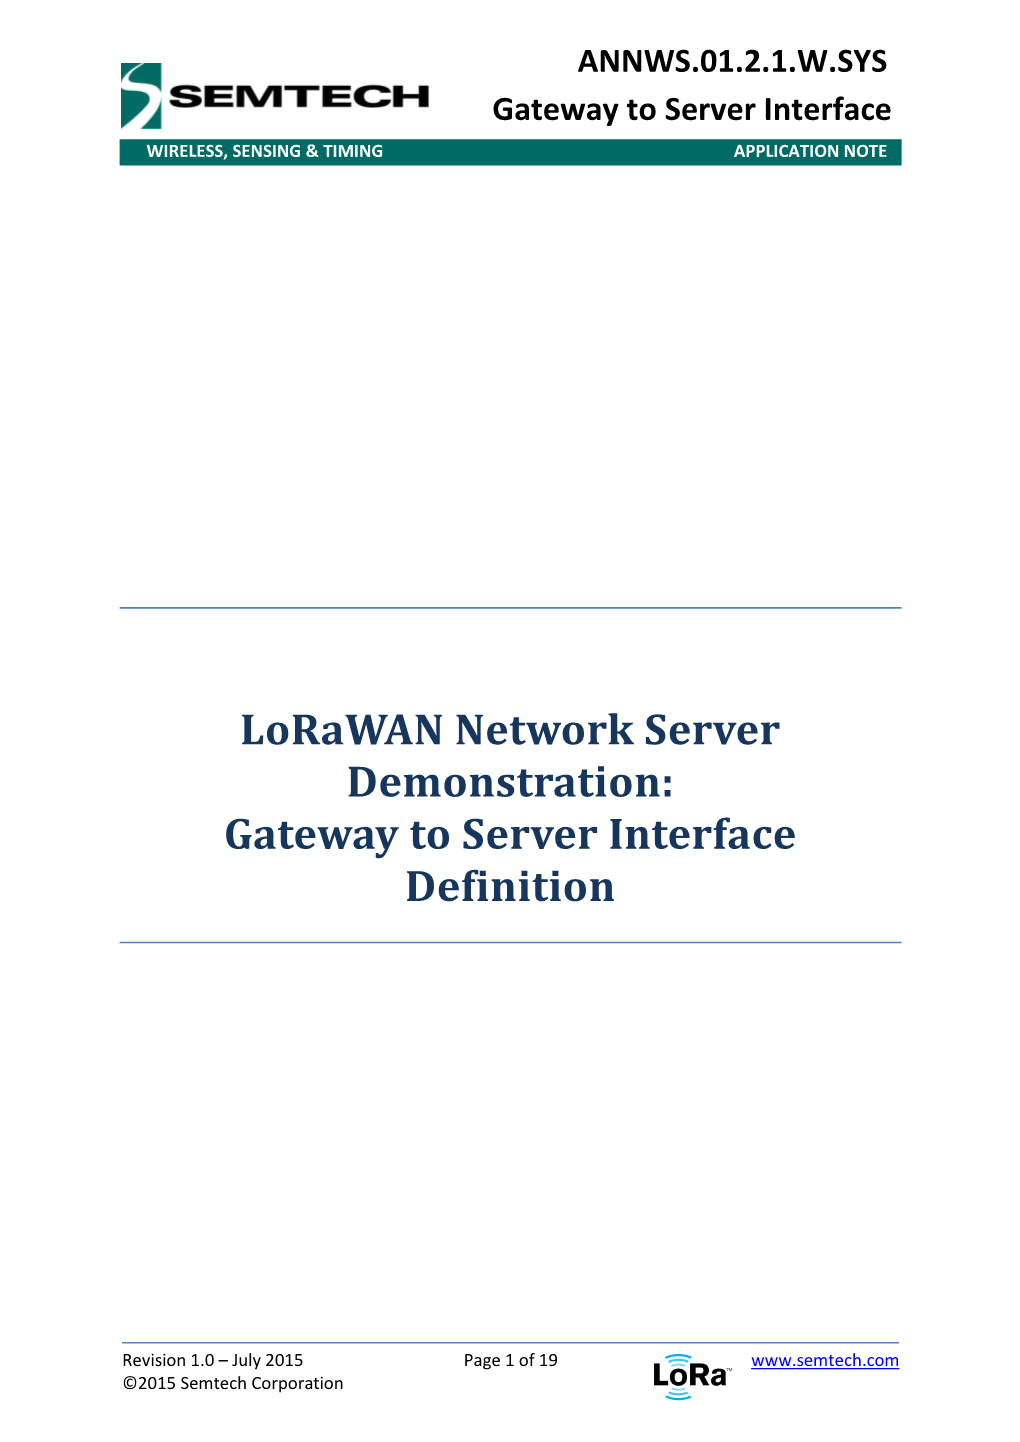 Lorawan Network Server Demonstration: Gateway to Server Interface Definition